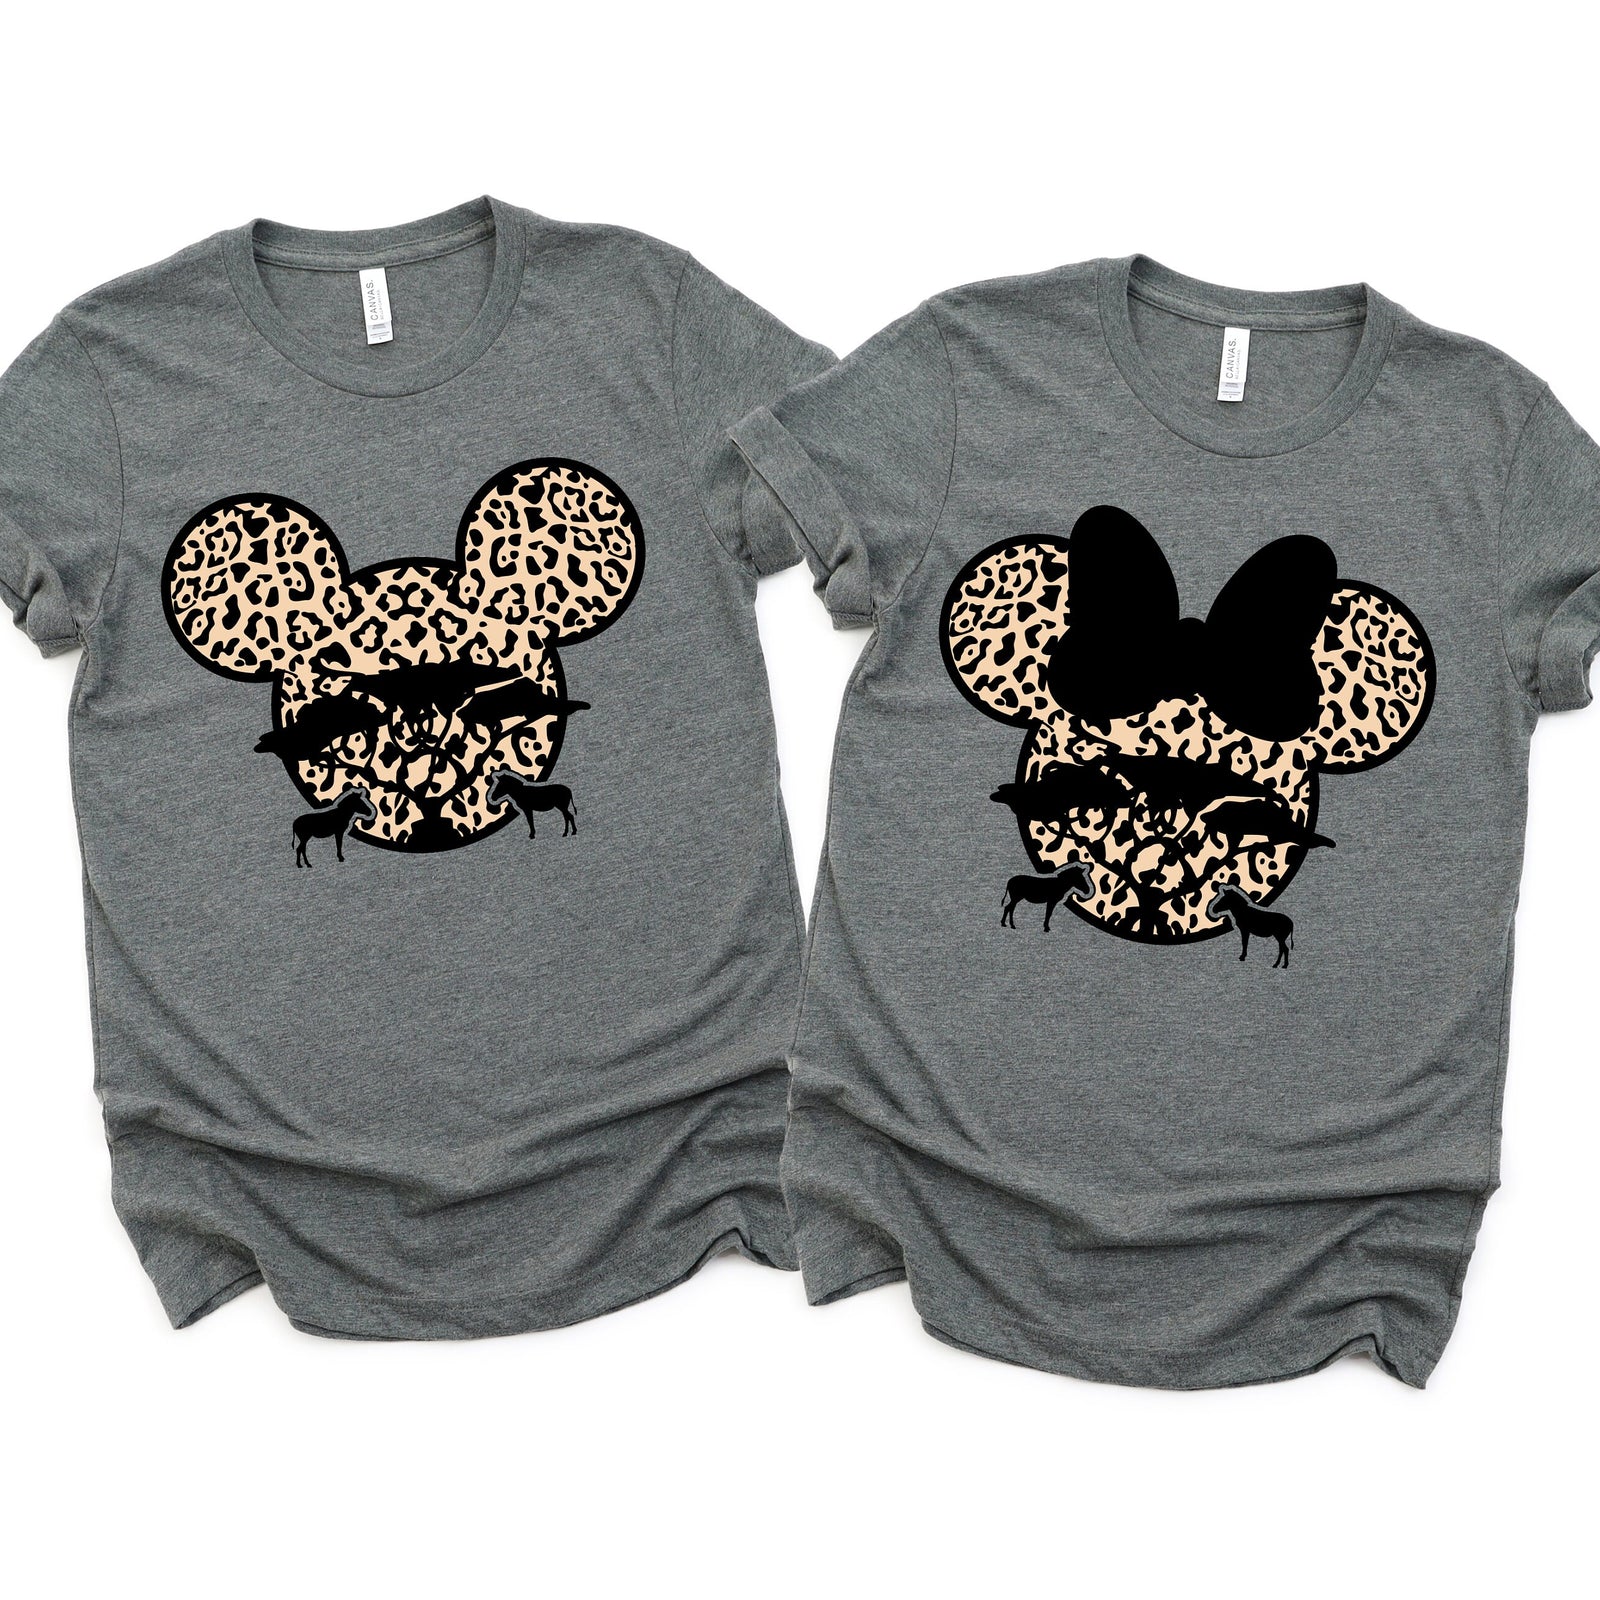 Minnie and Mickey Safari Adult Unisex Shirts - Disney Couples - Matching Shirts - Camouflaged Mickey - Animal Print